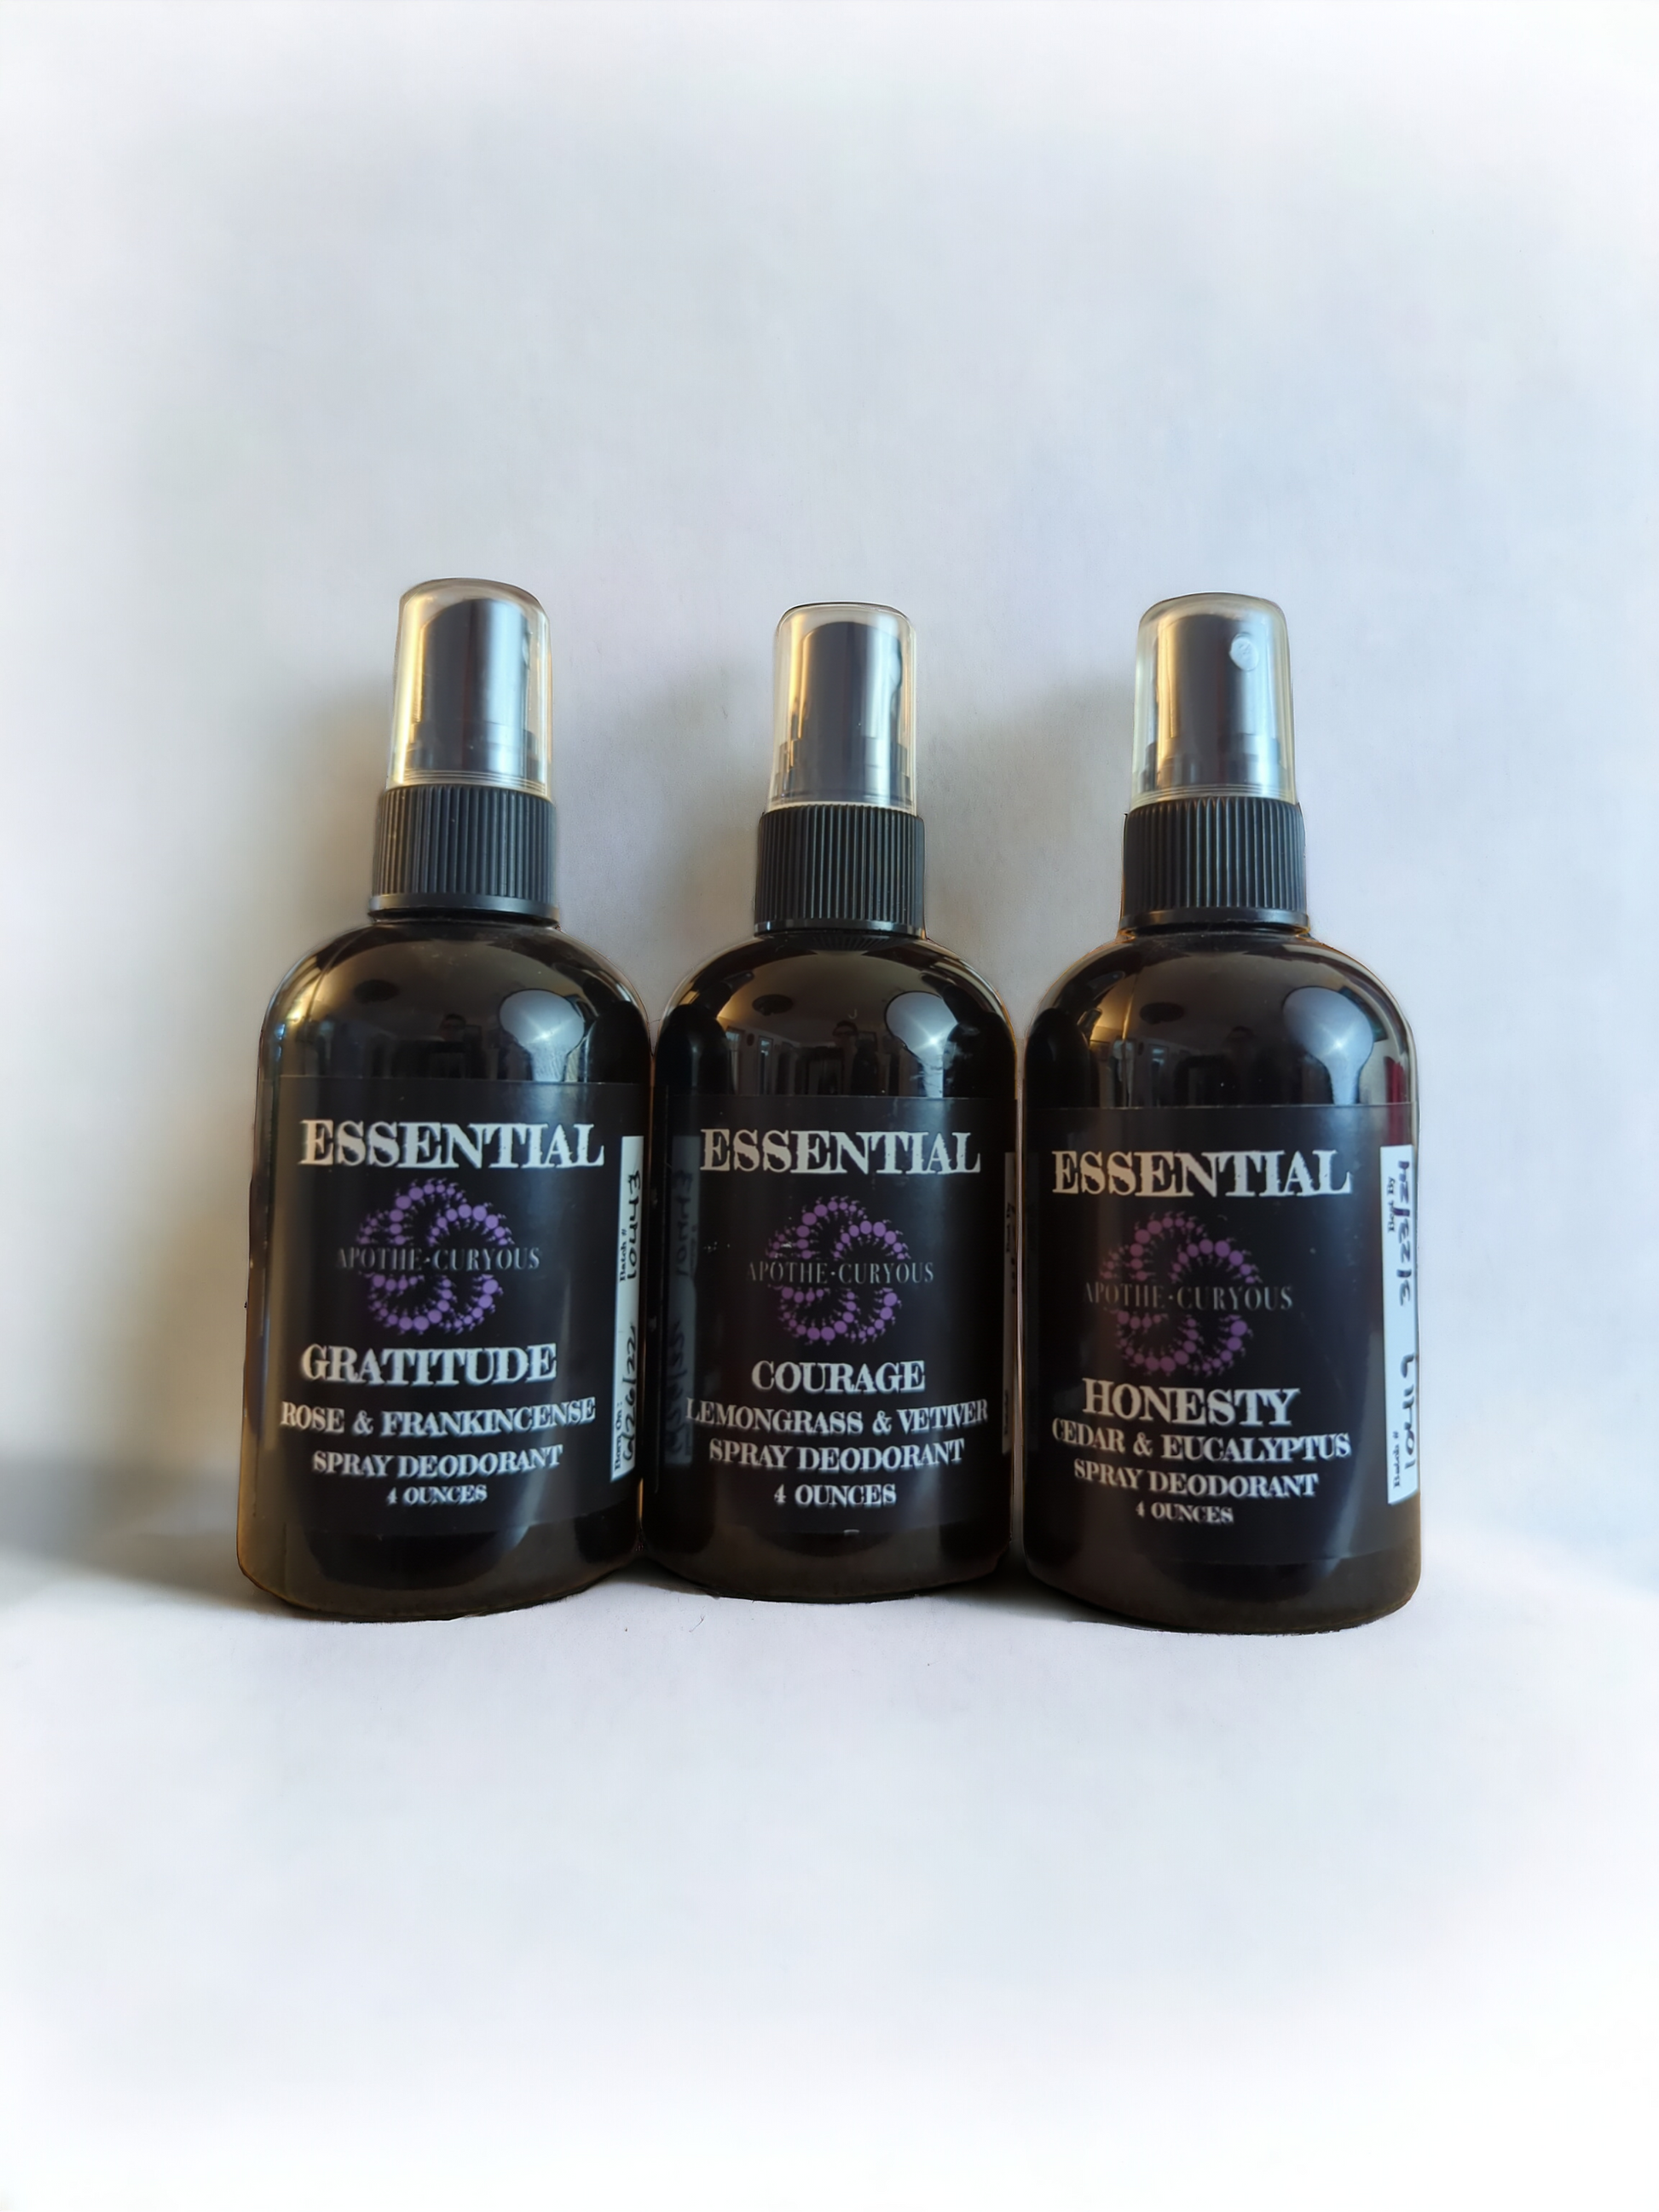 Essential spray deodorant, 3 scent options, Apothecuryous